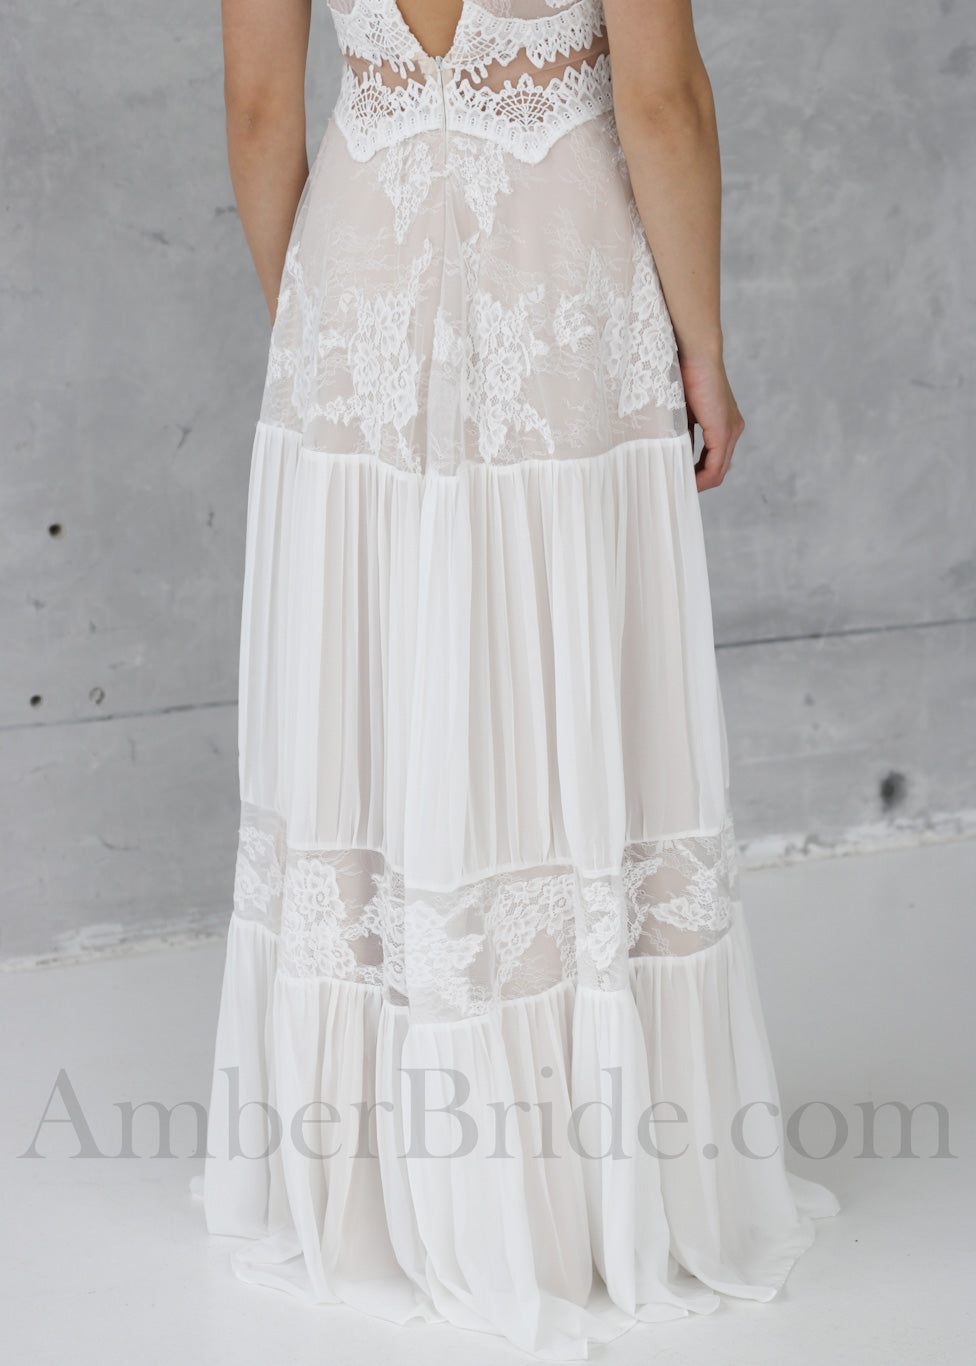 Boho Sheath Lace and Chiffon Wedding Dress with Short Sleeves, and Open V-Back